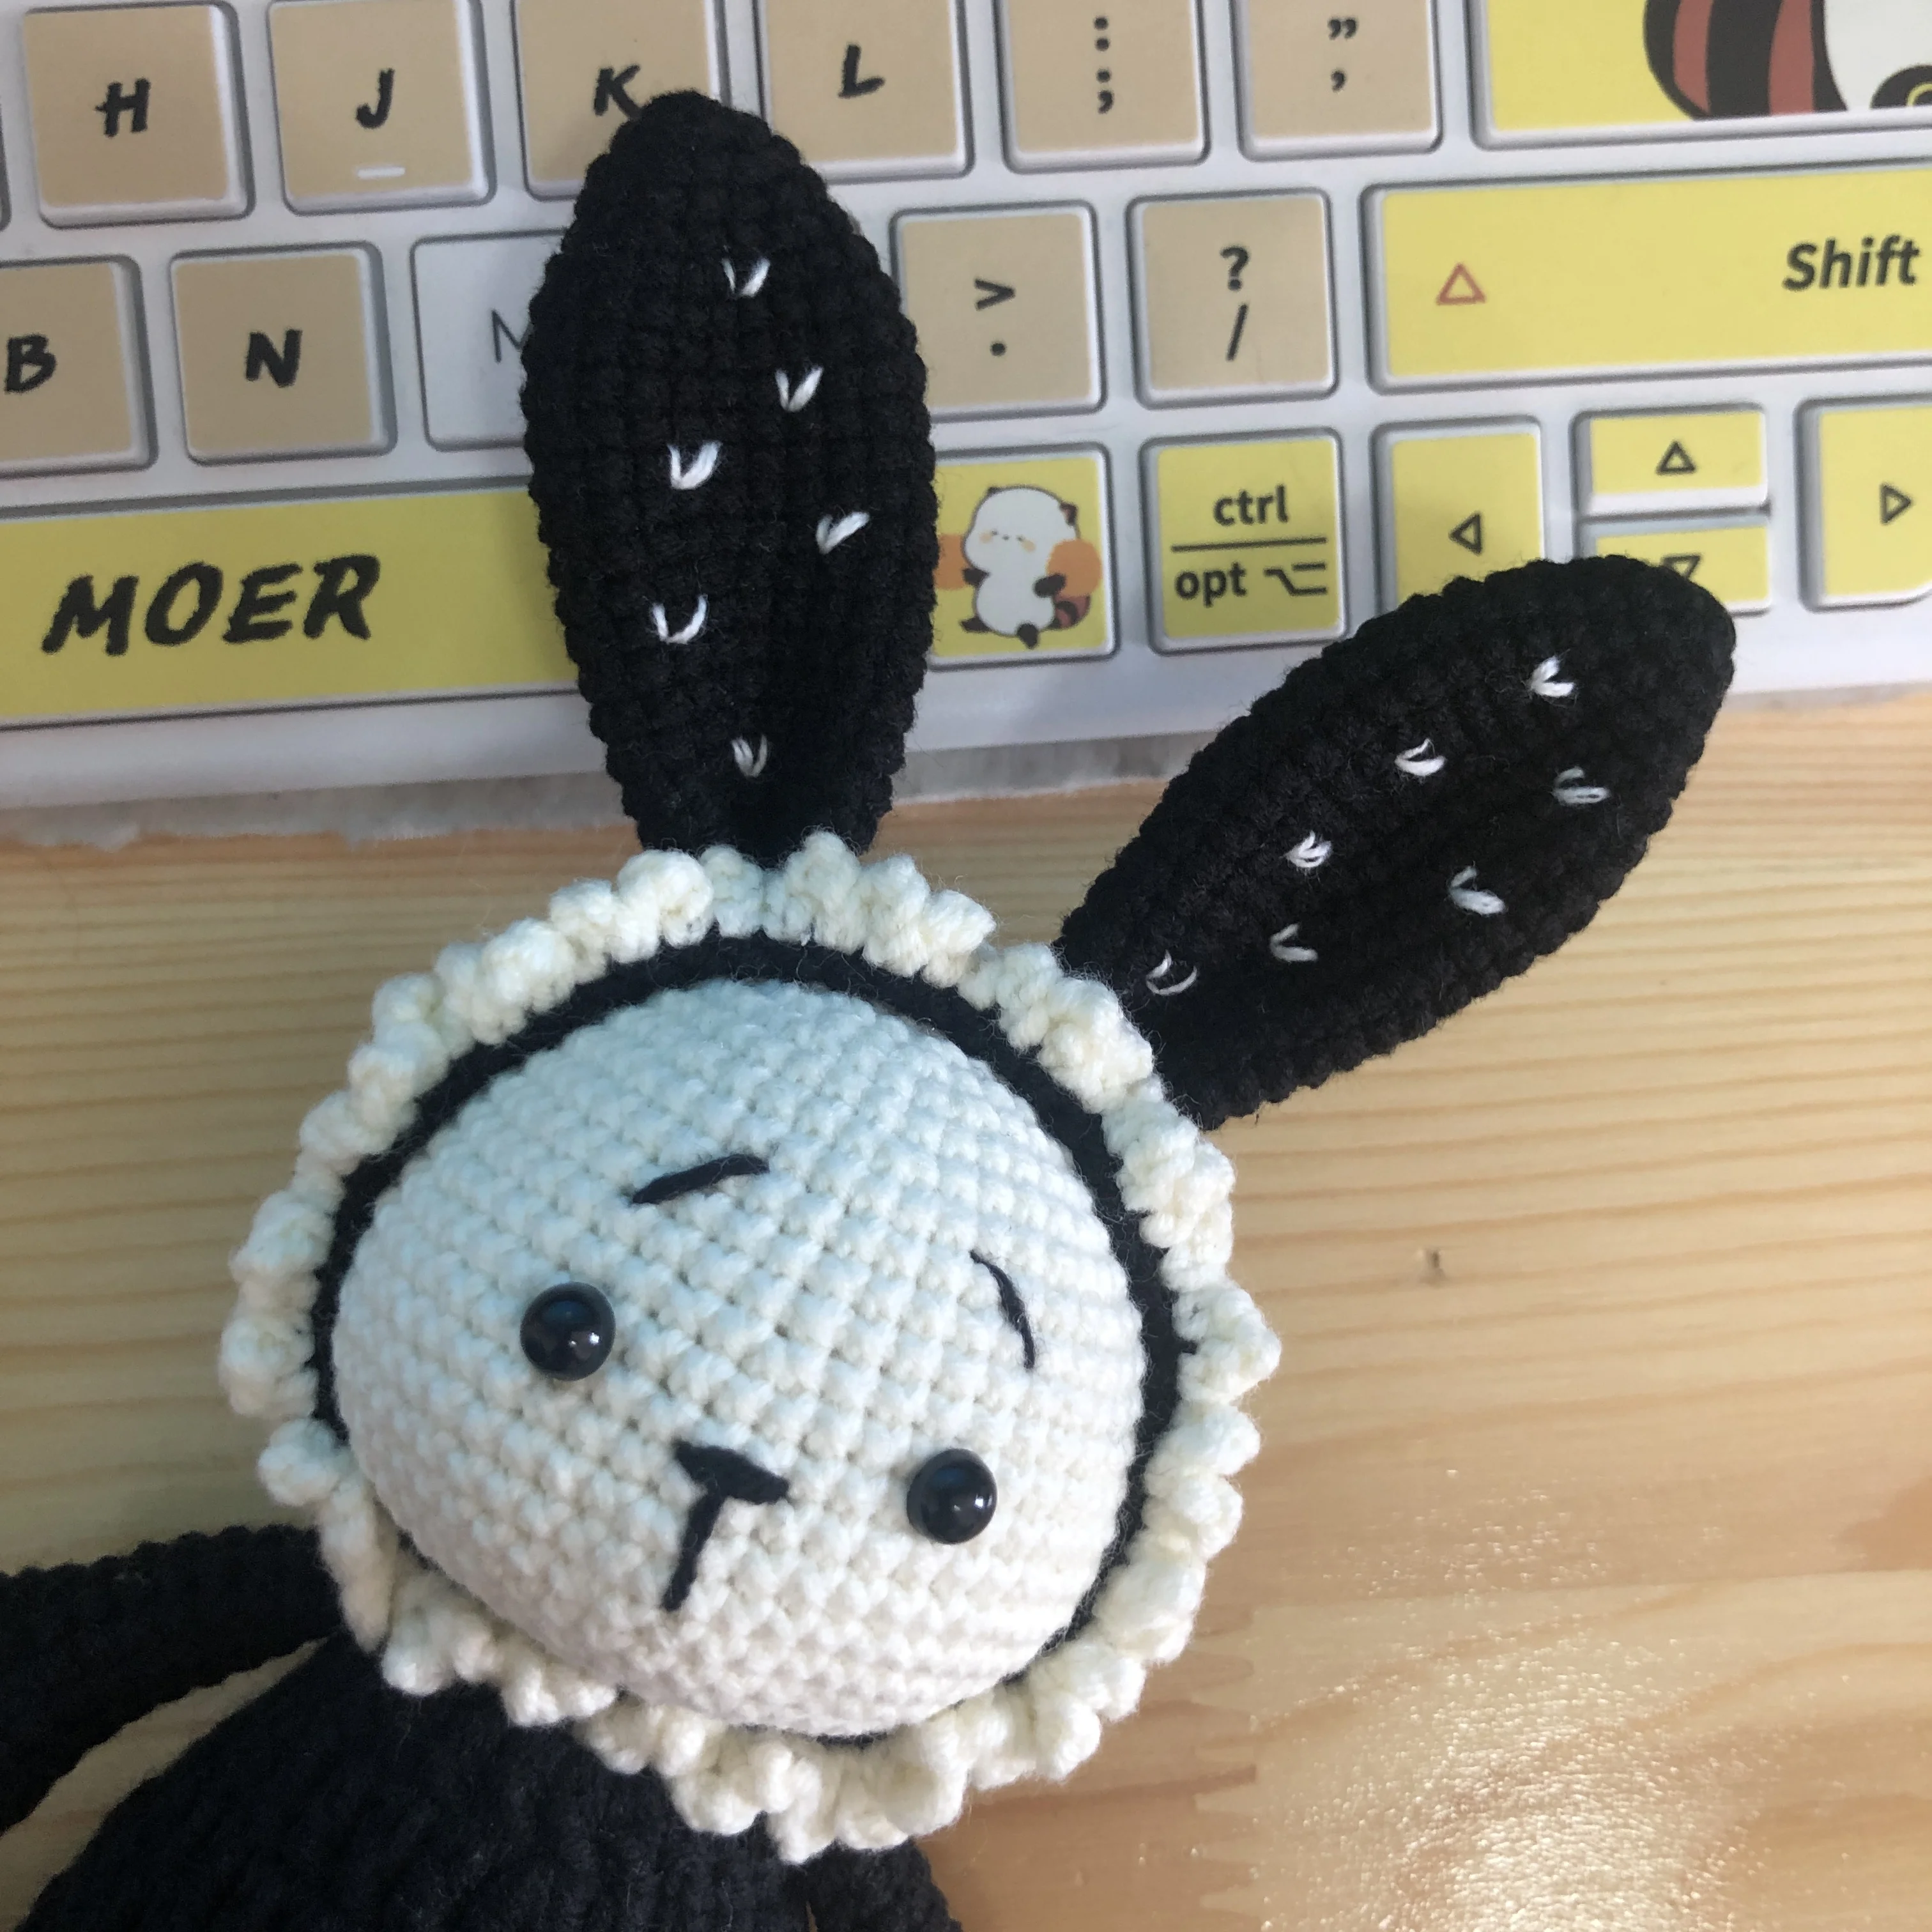 HANDMADE Crochet Bunny Rabbit w/ Button Eyes Stuffed Plush Animal